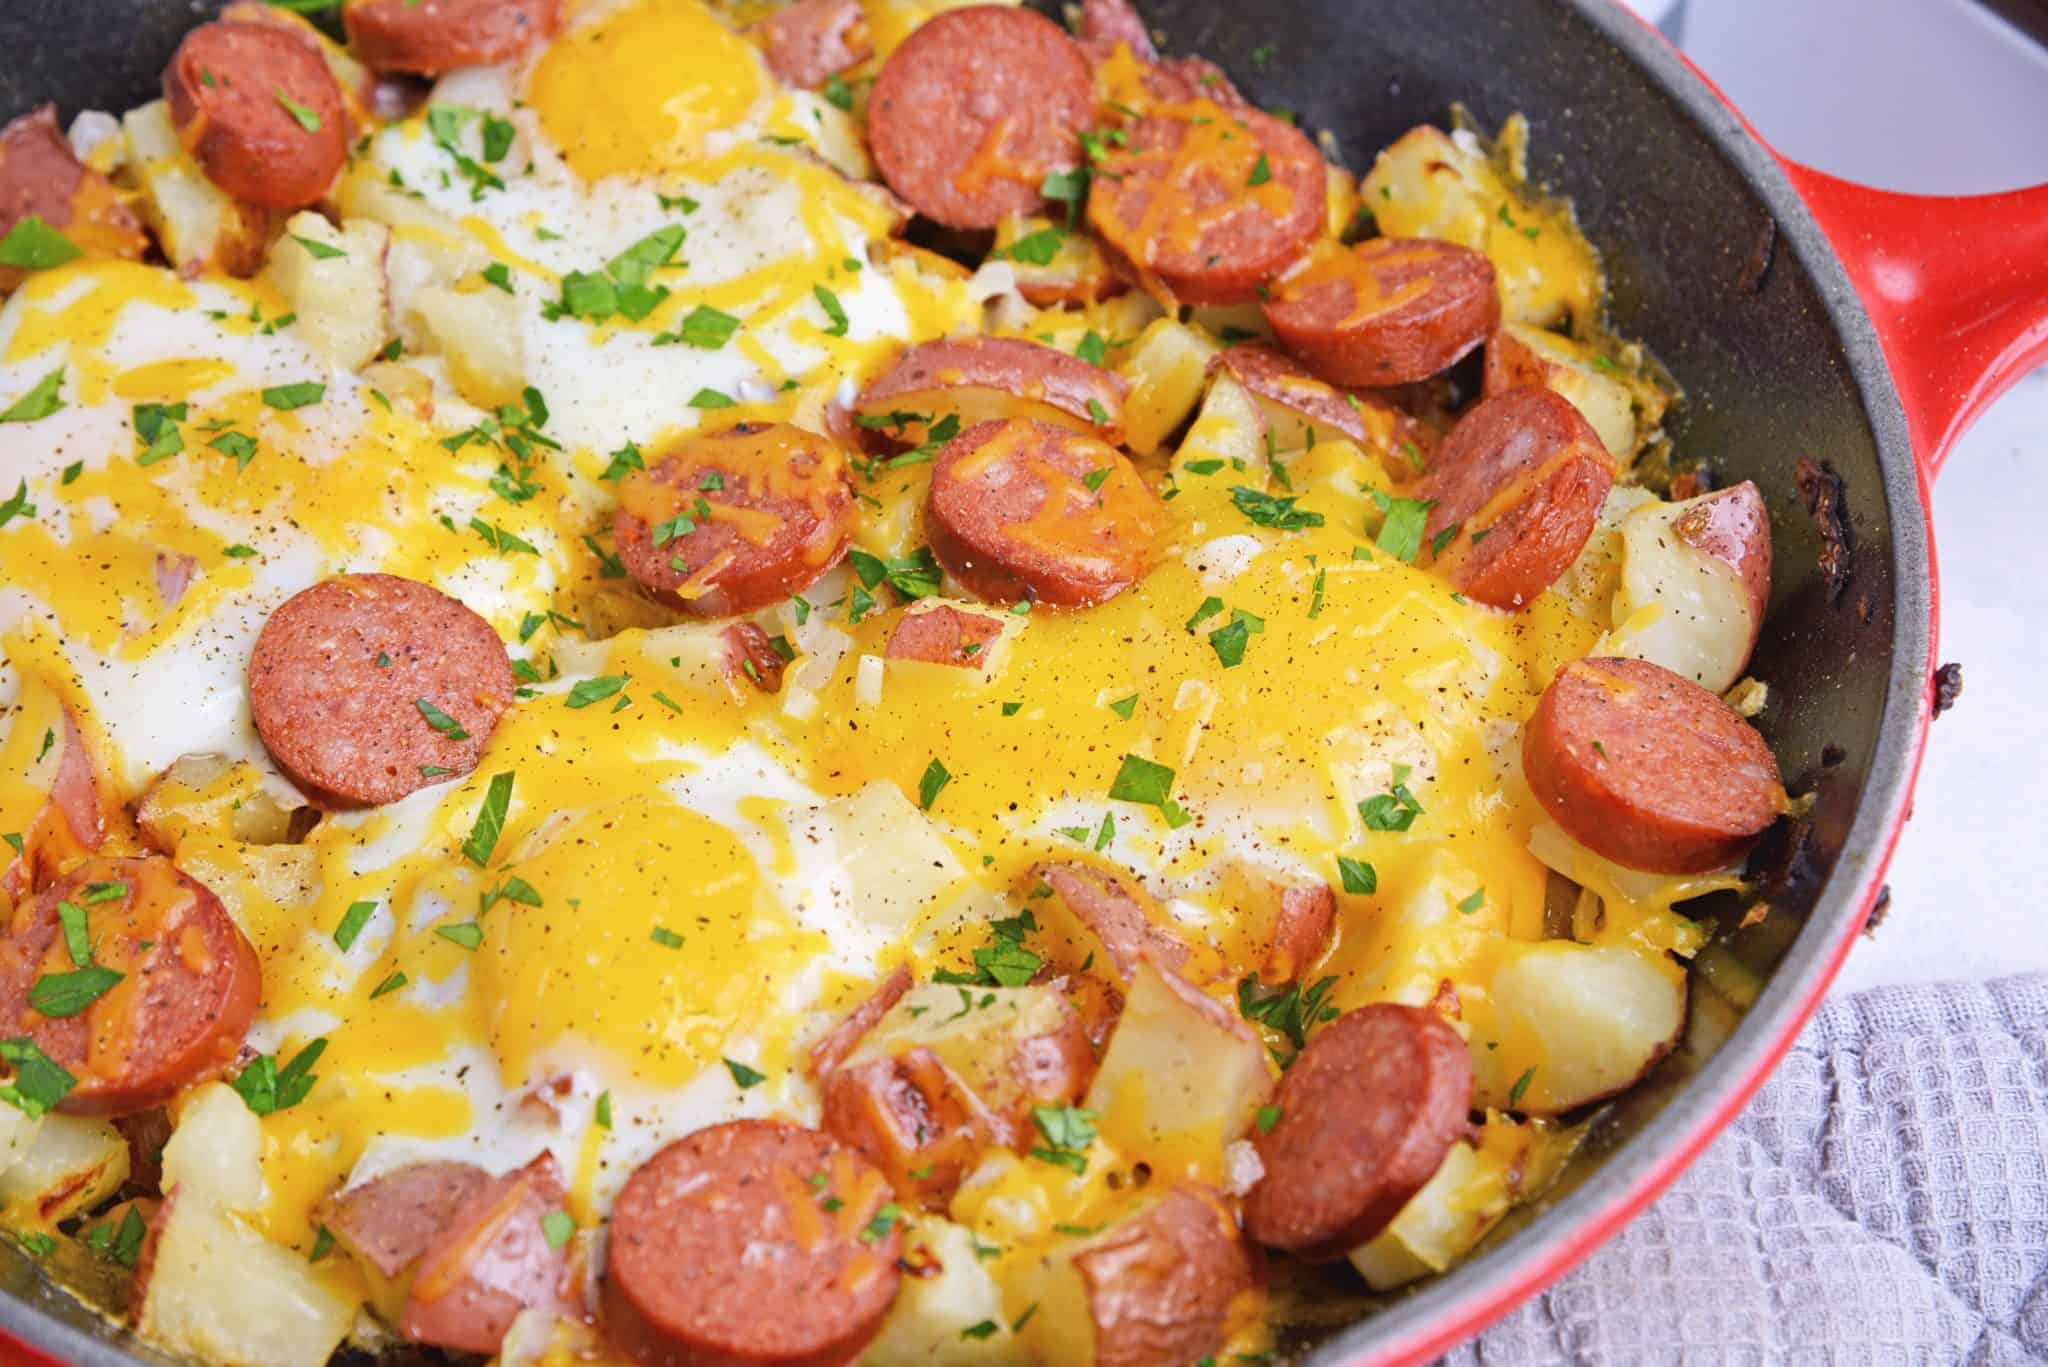 https://www.savoryexperiments.com/wp-content/uploads/2014/03/Potato-Egg-and-Sausage-Skillet-1.jpg